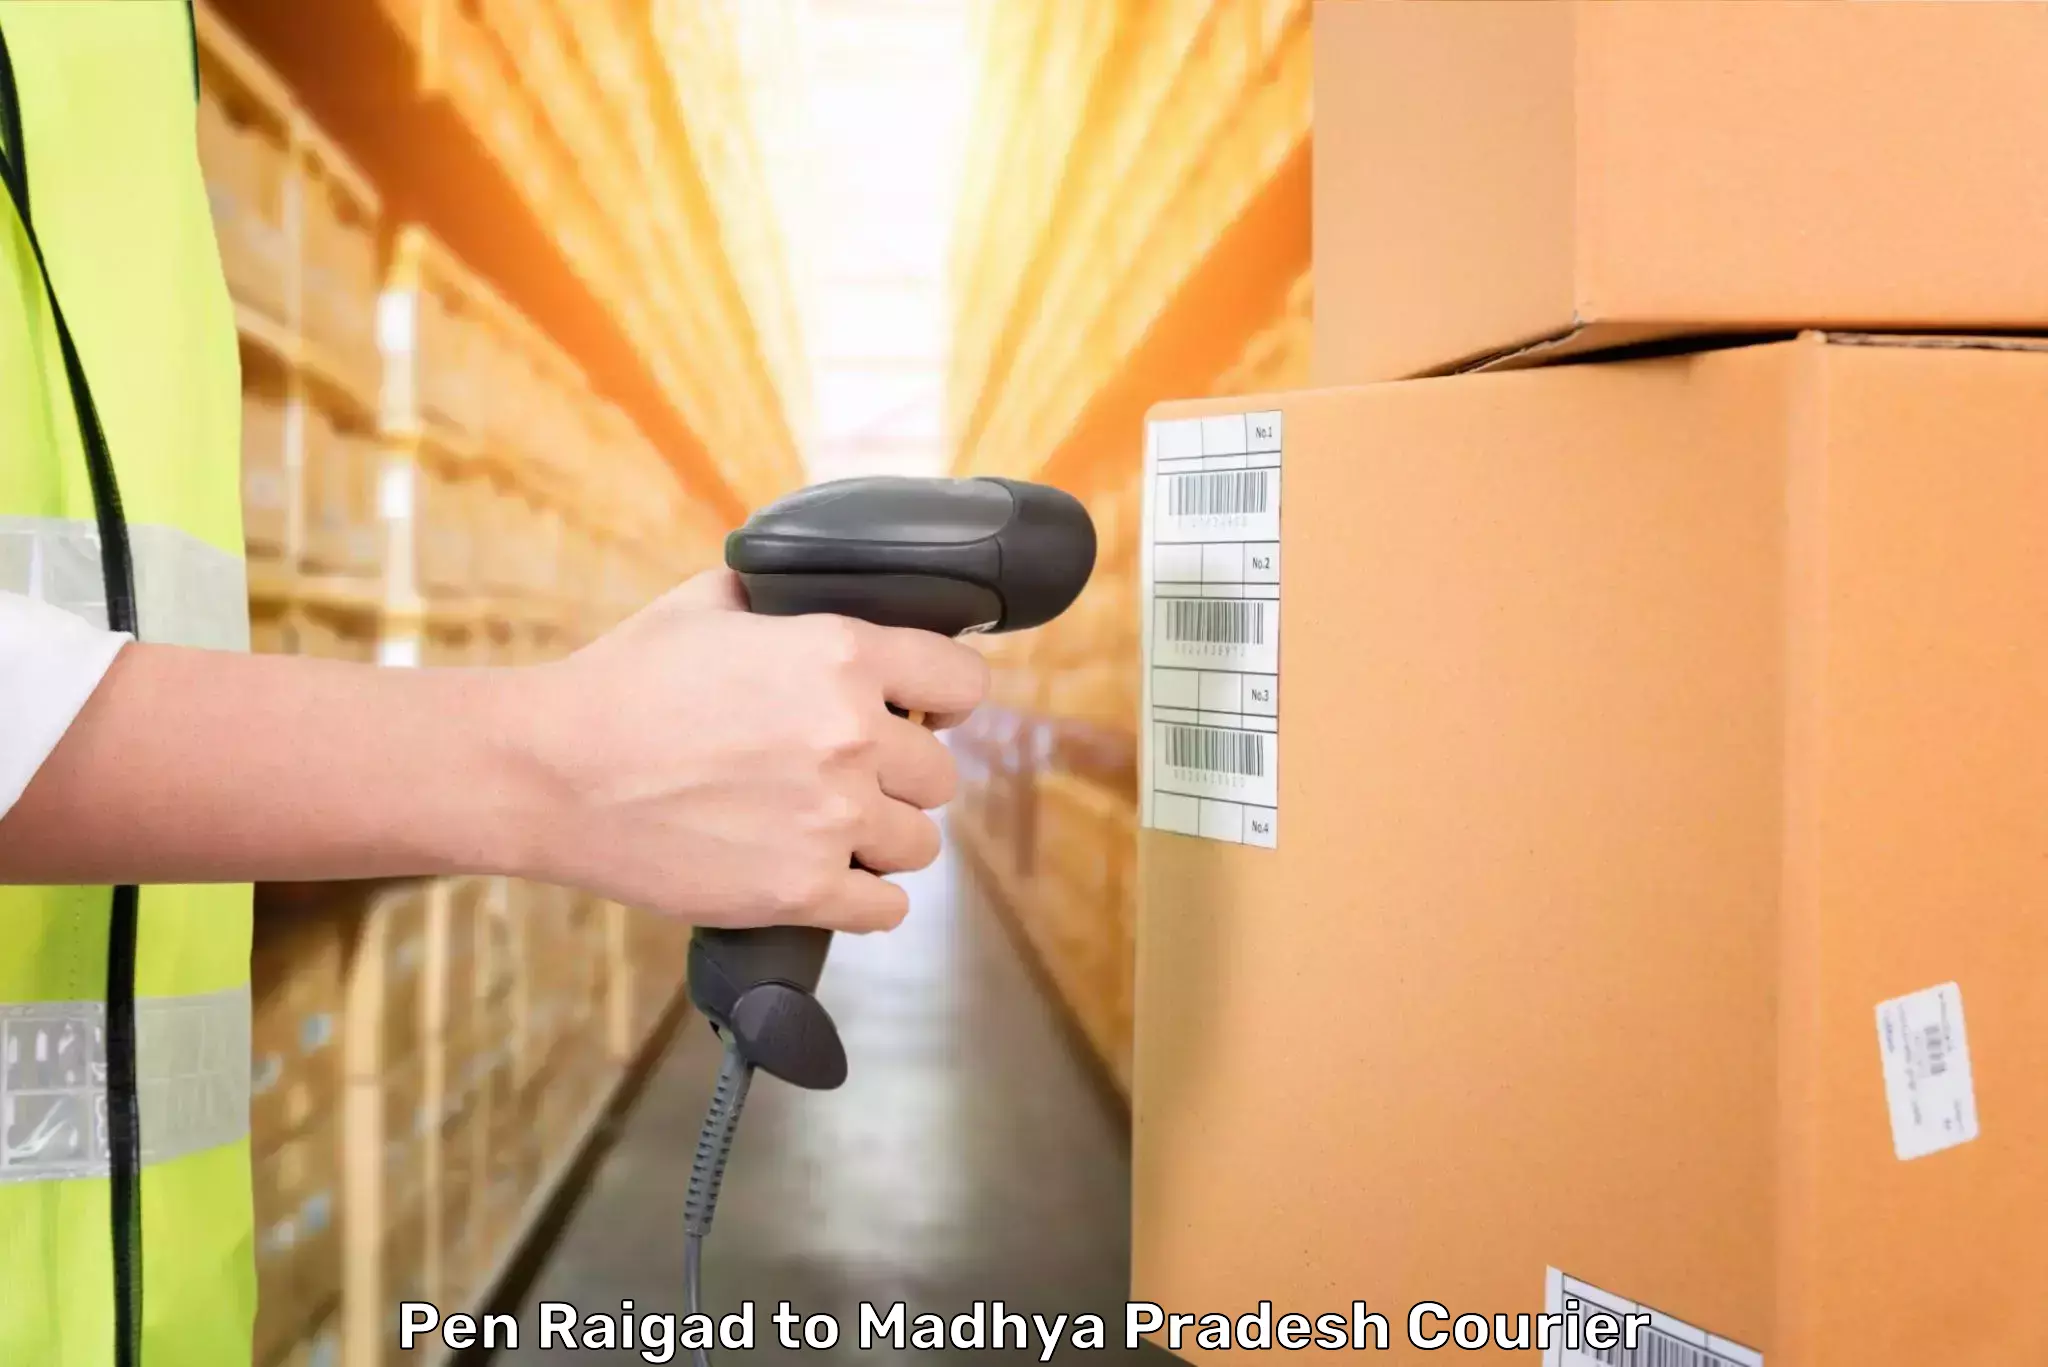 Personal effects shipping Pen Raigad to Rampur Baghelan